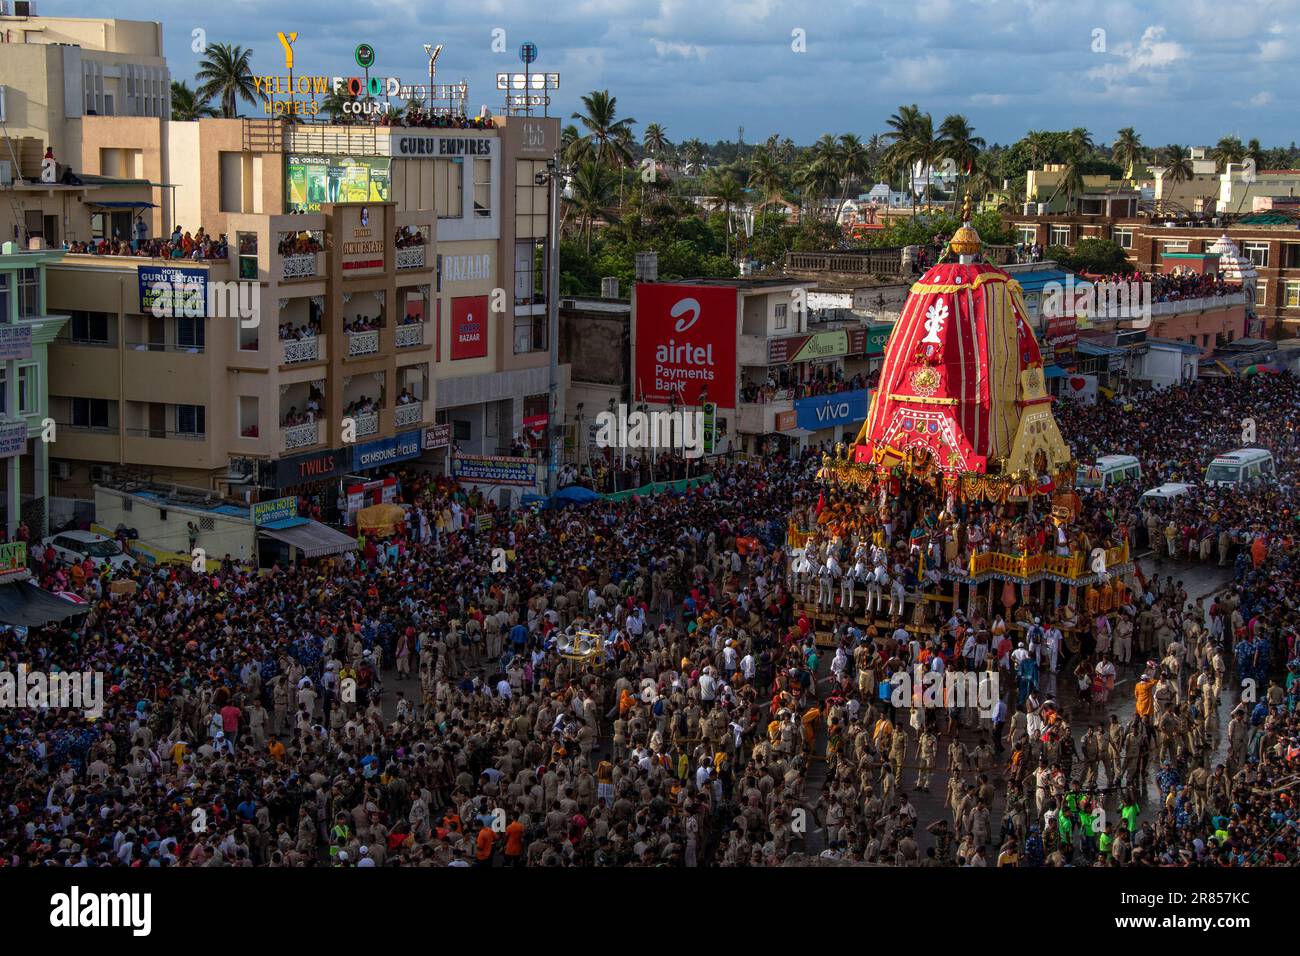 Famous ratha yatra festival of puri odisha india Stock Photo